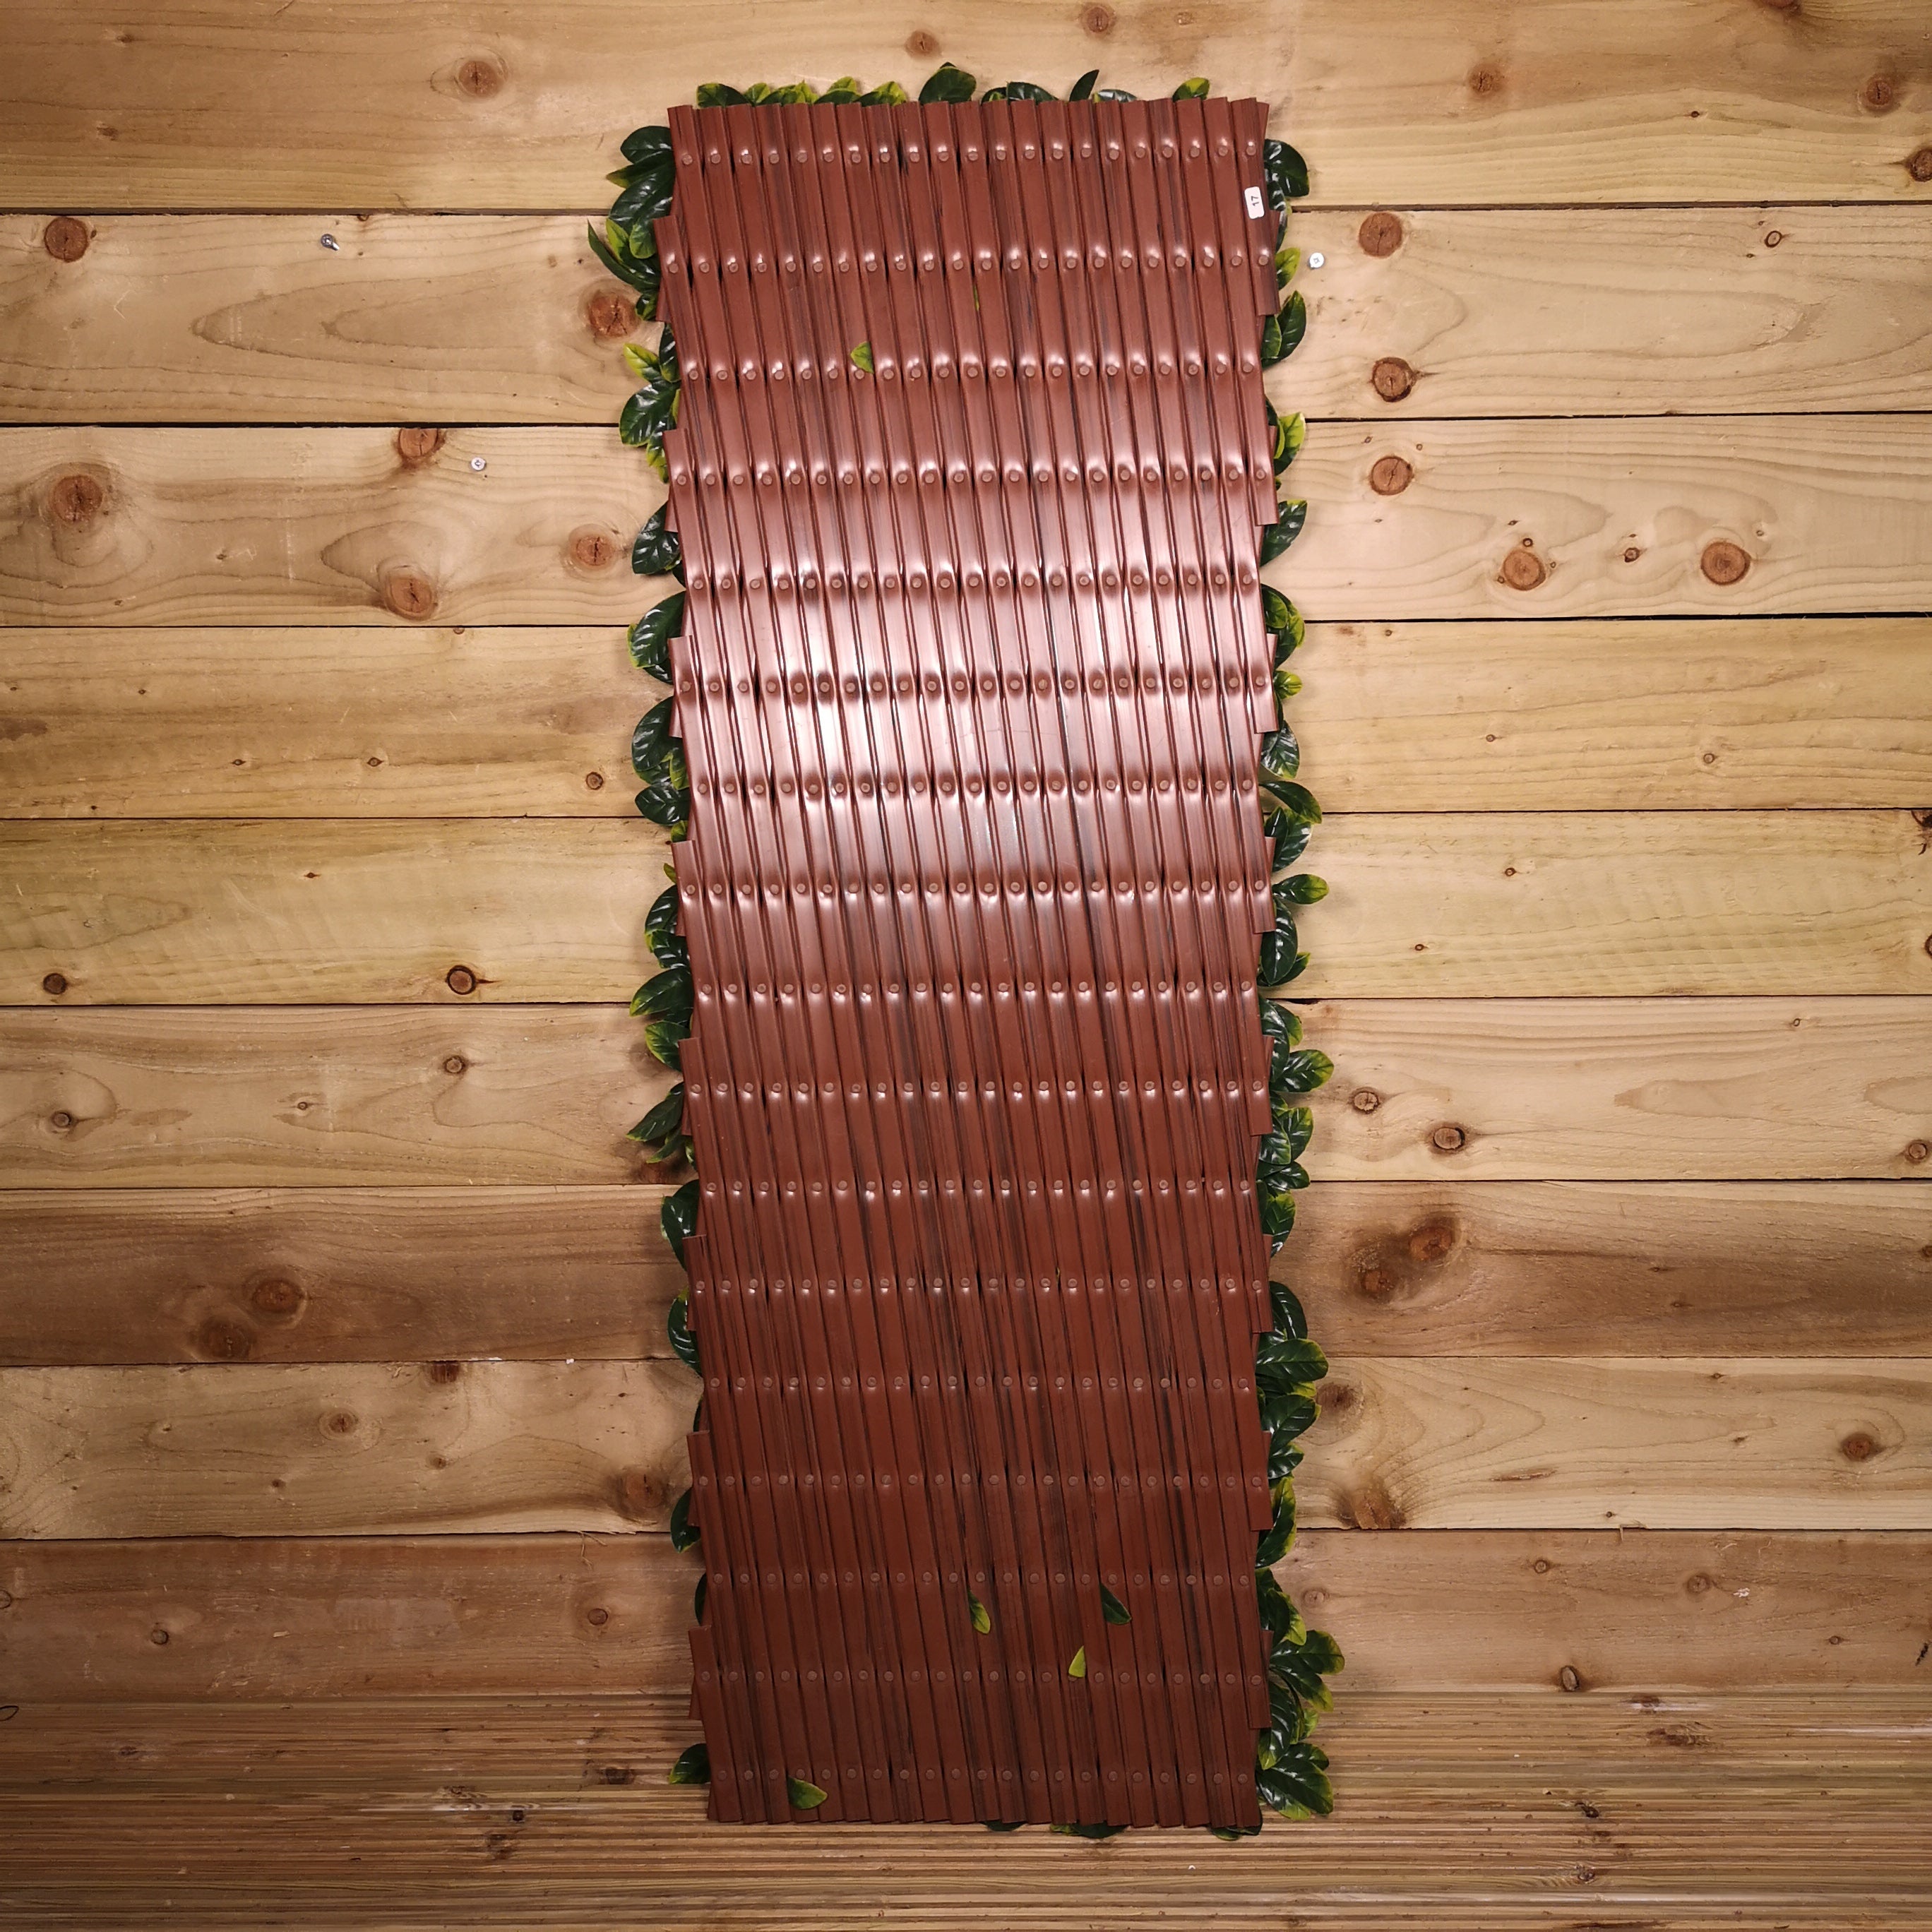 100cm x 200cm PE Backed Artificial Fence Garden Trellis Privacy Screening Indoor Outdoor Wall Panel - Laurel Leaf